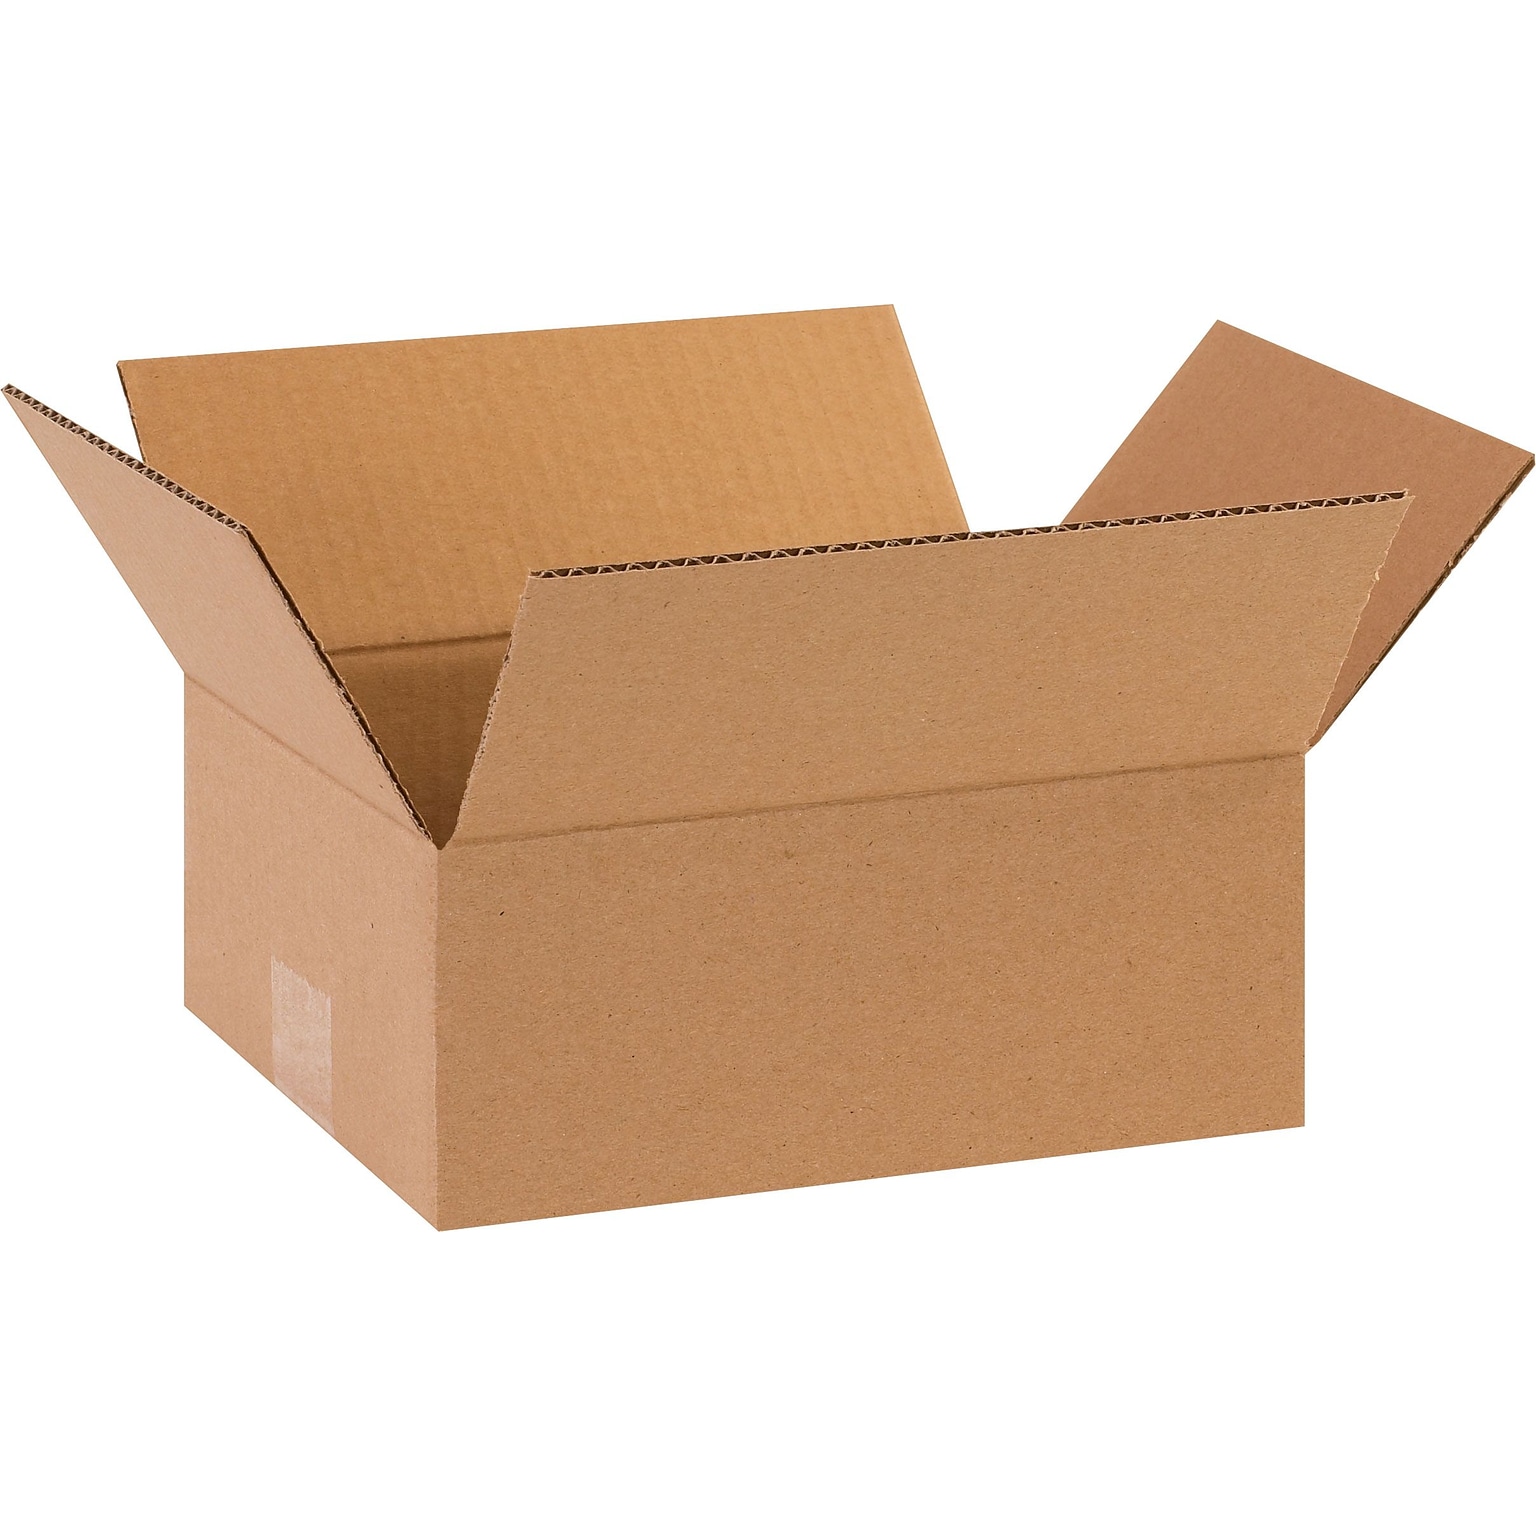 10 x 8 x 4 Shipping Boxes, 32 ECT, Brown, 25/Bundle (1084)